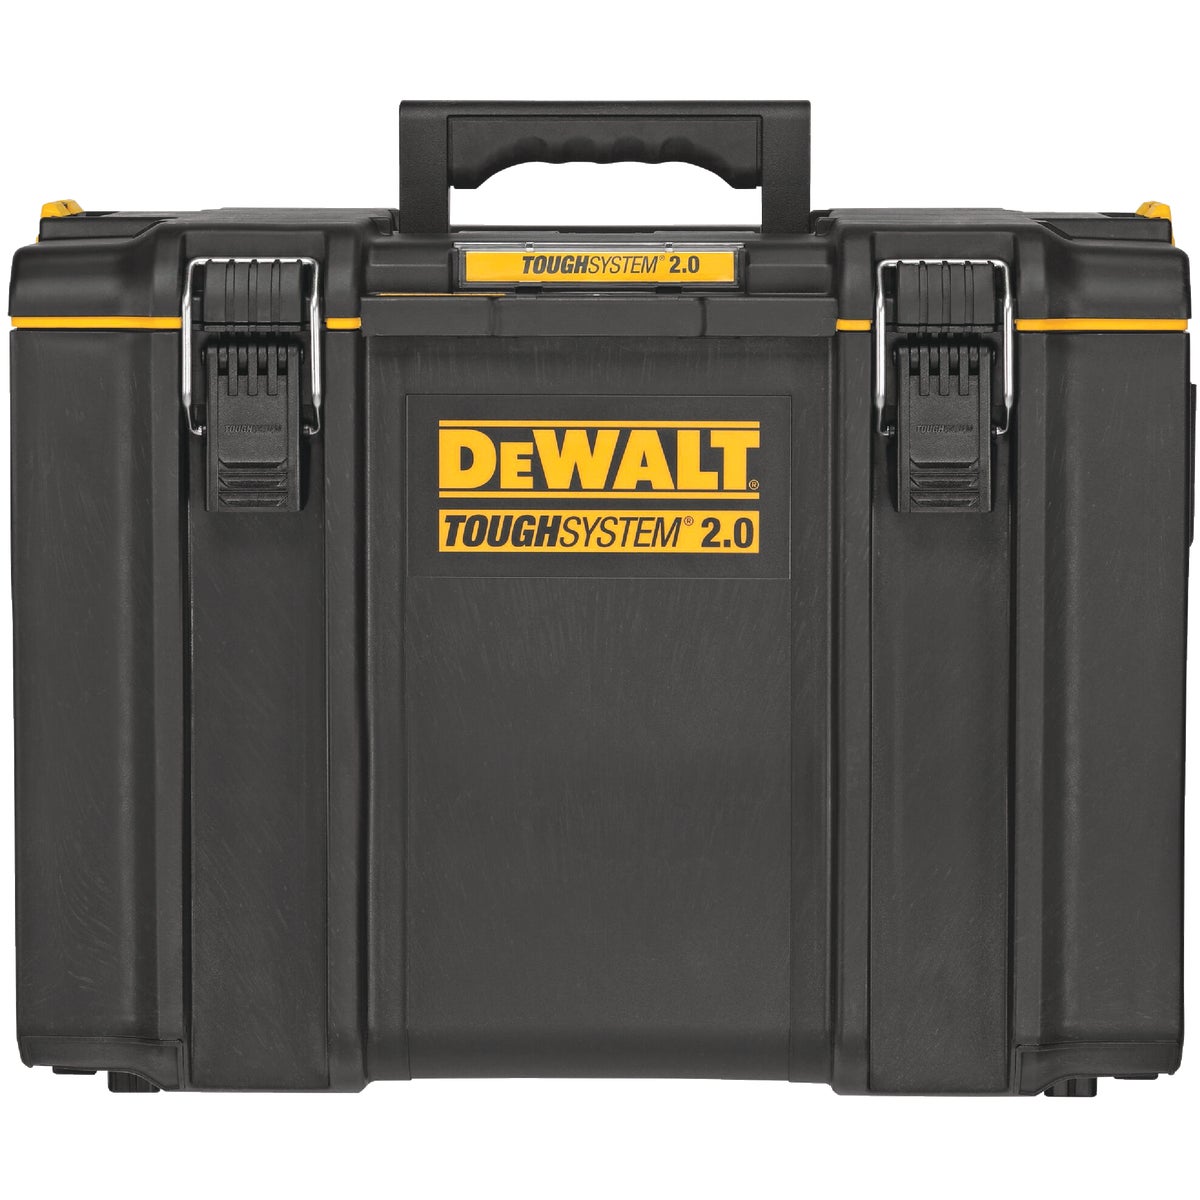 DEWALT ToughSystem 2.0 XL Tool Box, 110 Lb. Capacity